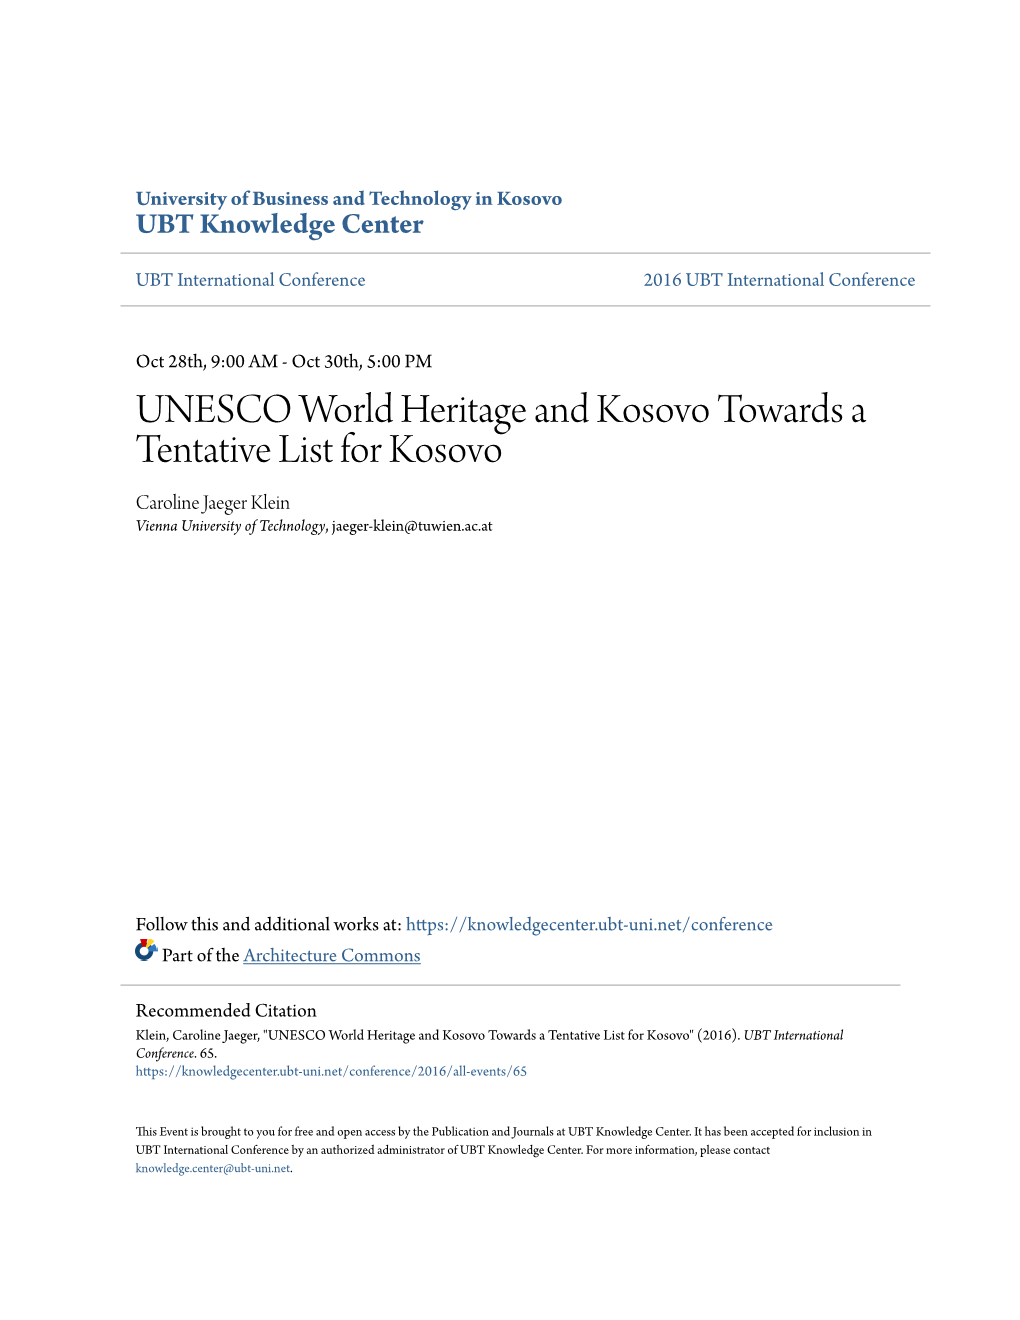 UNESCO World Heritage and Kosovo Towards a Tentative List for Kosovo Caroline Jaeger Klein Vienna University of Technology, Jaeger-Klein@Tuwien.Ac.At